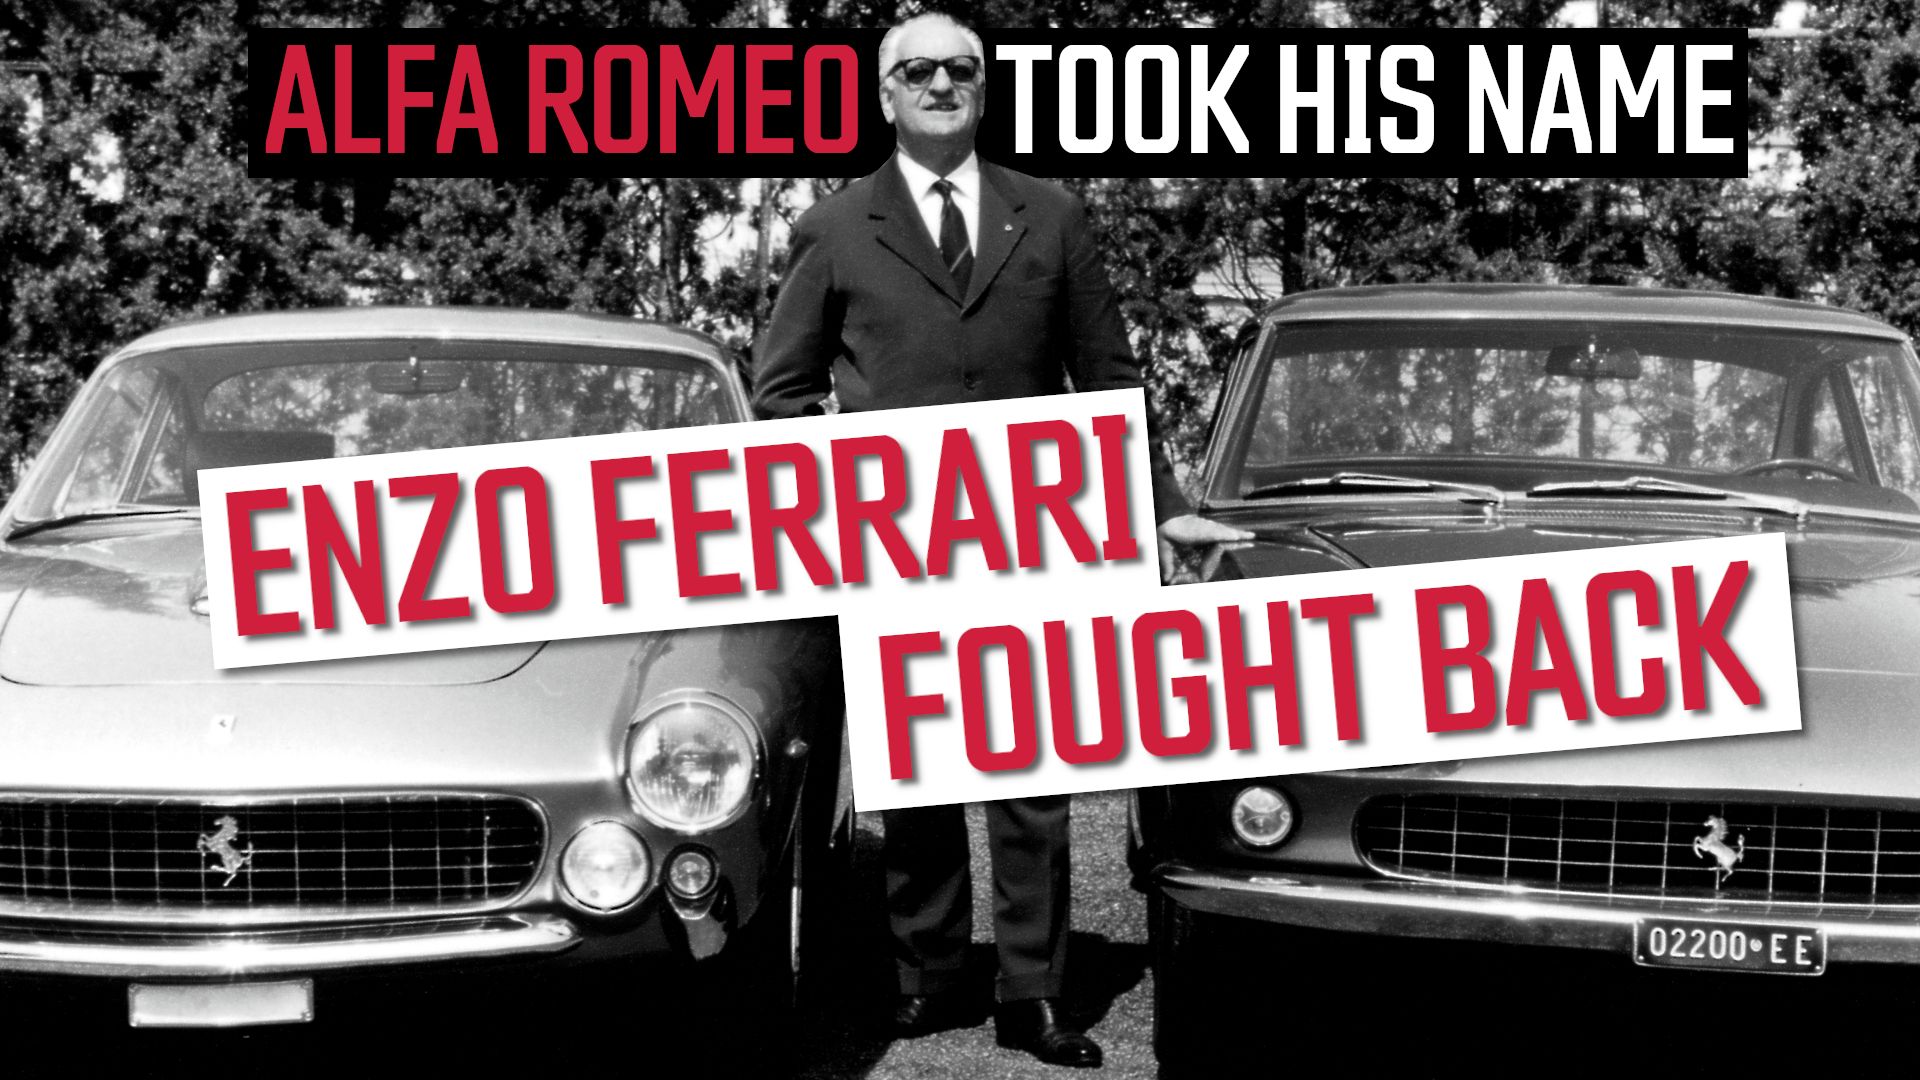 Enzo Ferrari Lost His Own Name-1